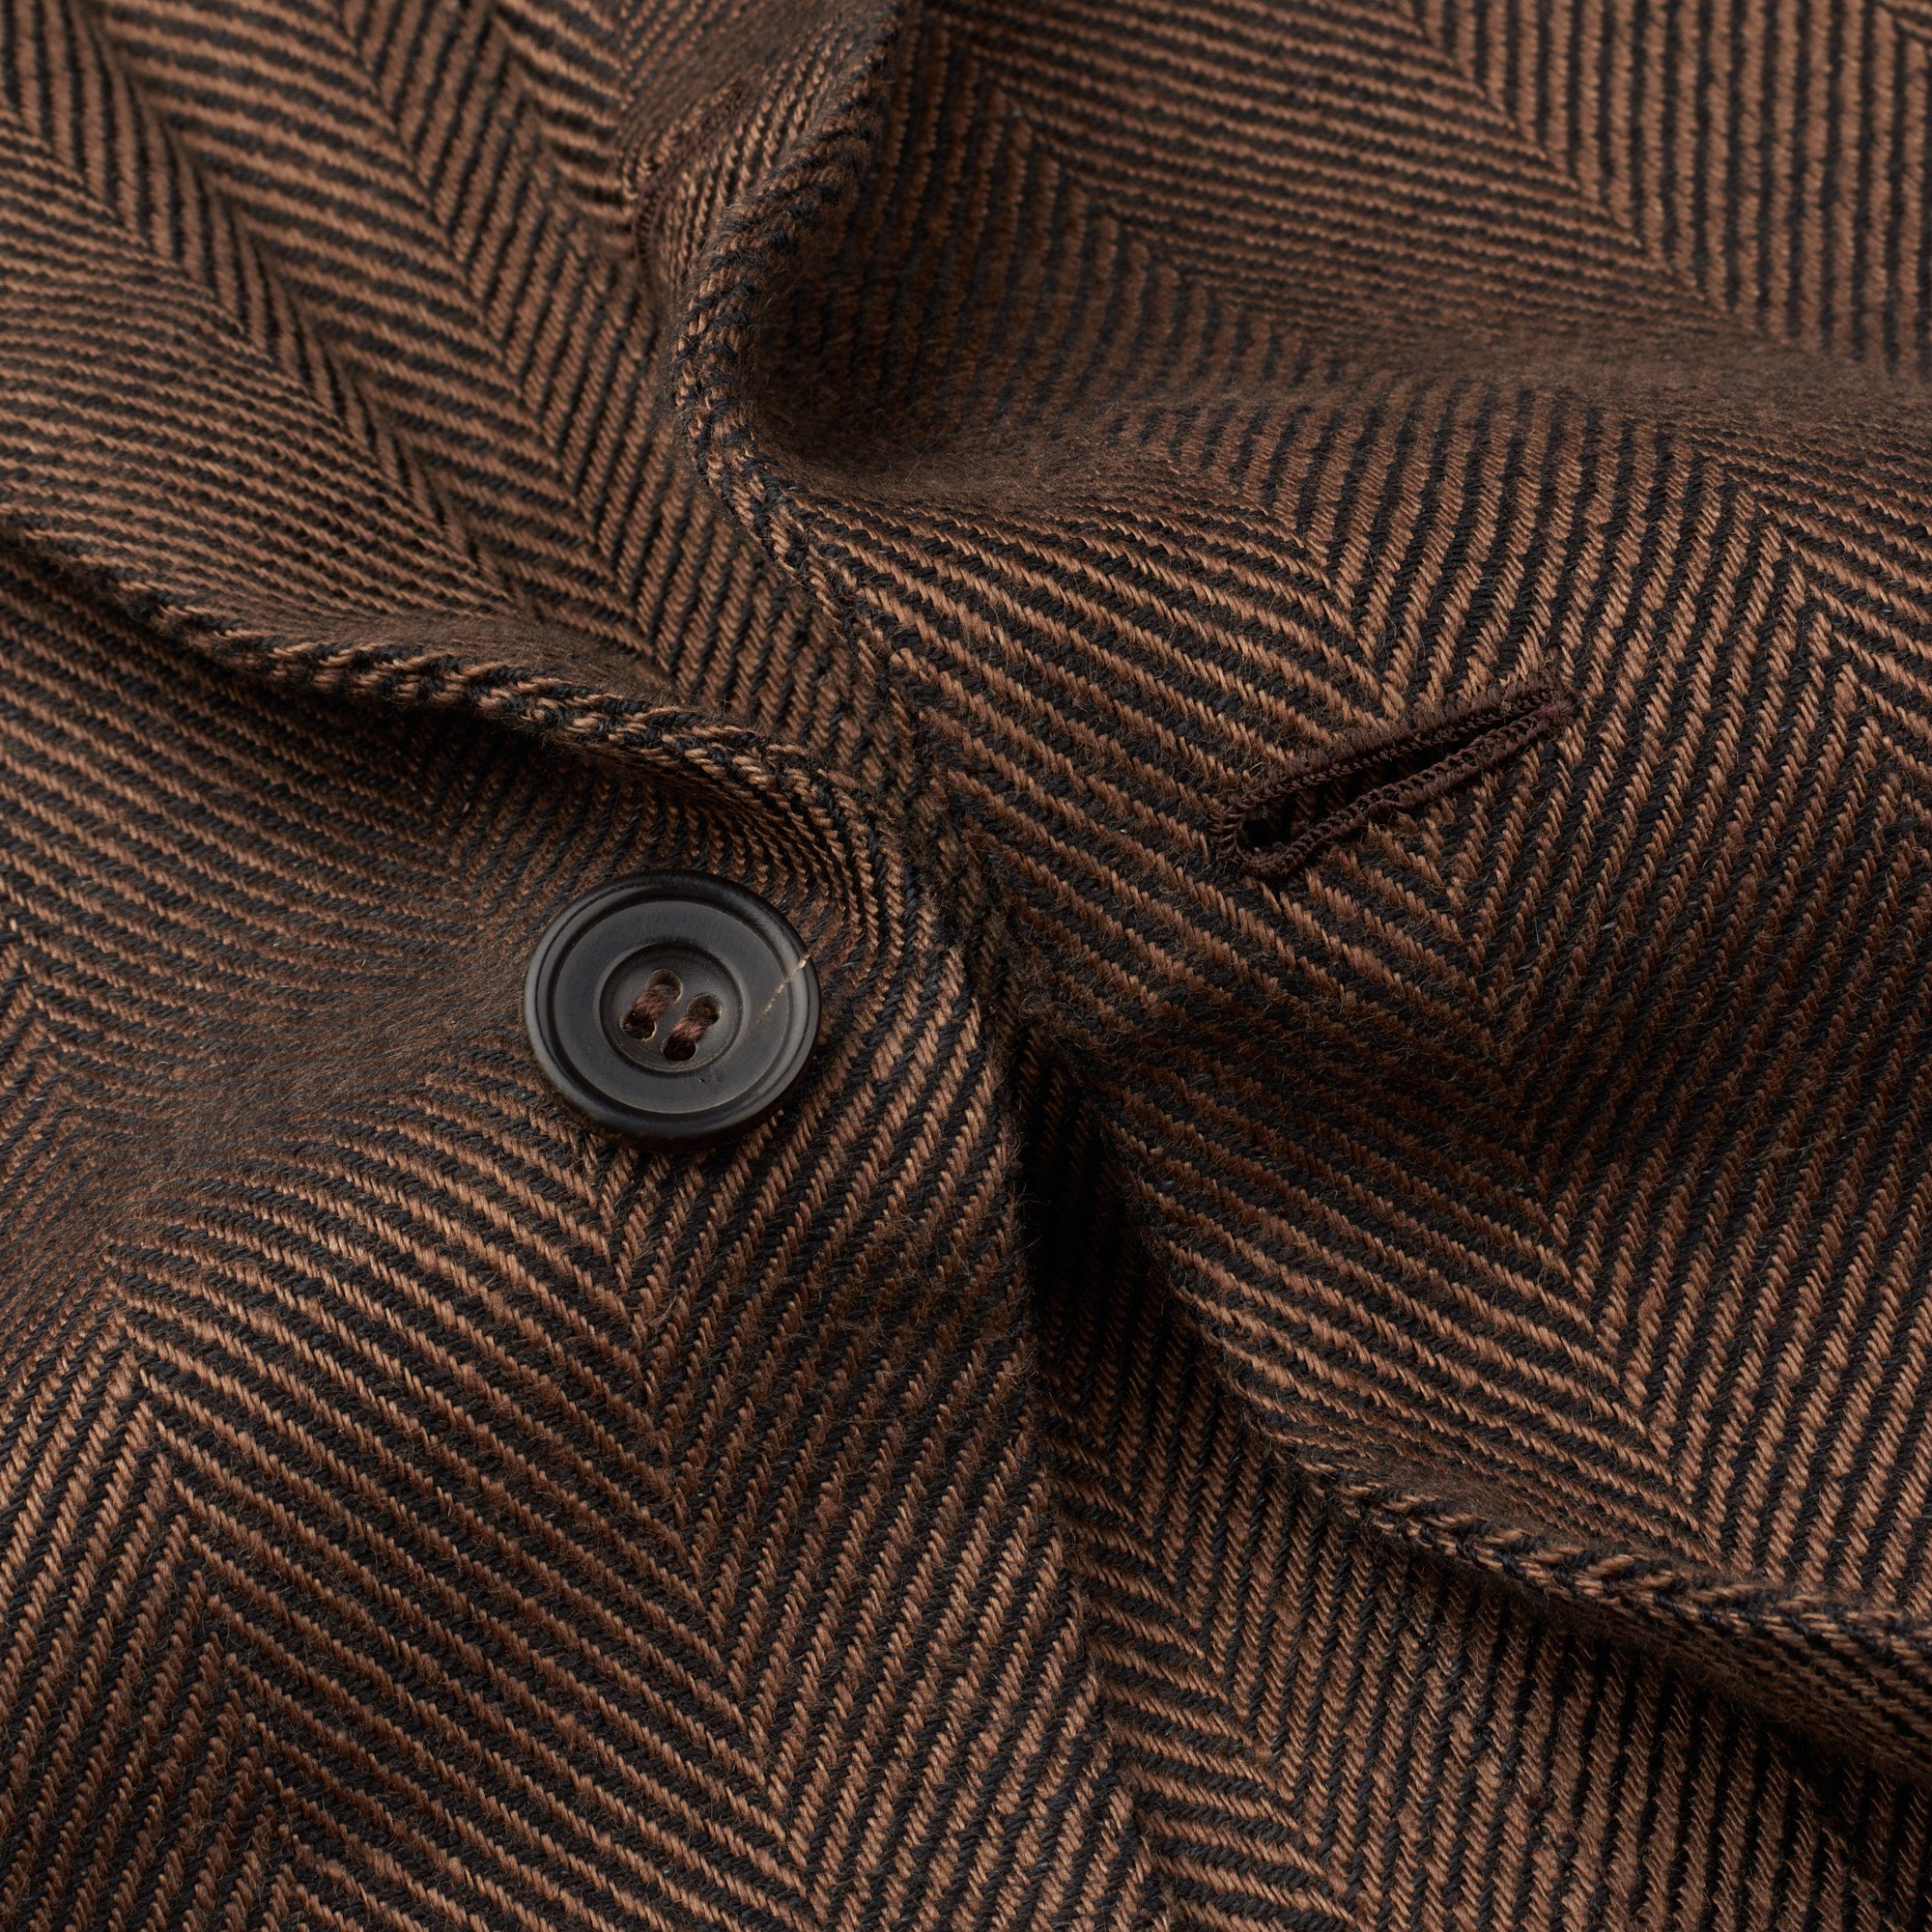 RUBINACCI LH Handmade Bespoke Brown Herringbone Cotton-Linen Jacket EU 50 NEW US 40 RUBINACCI